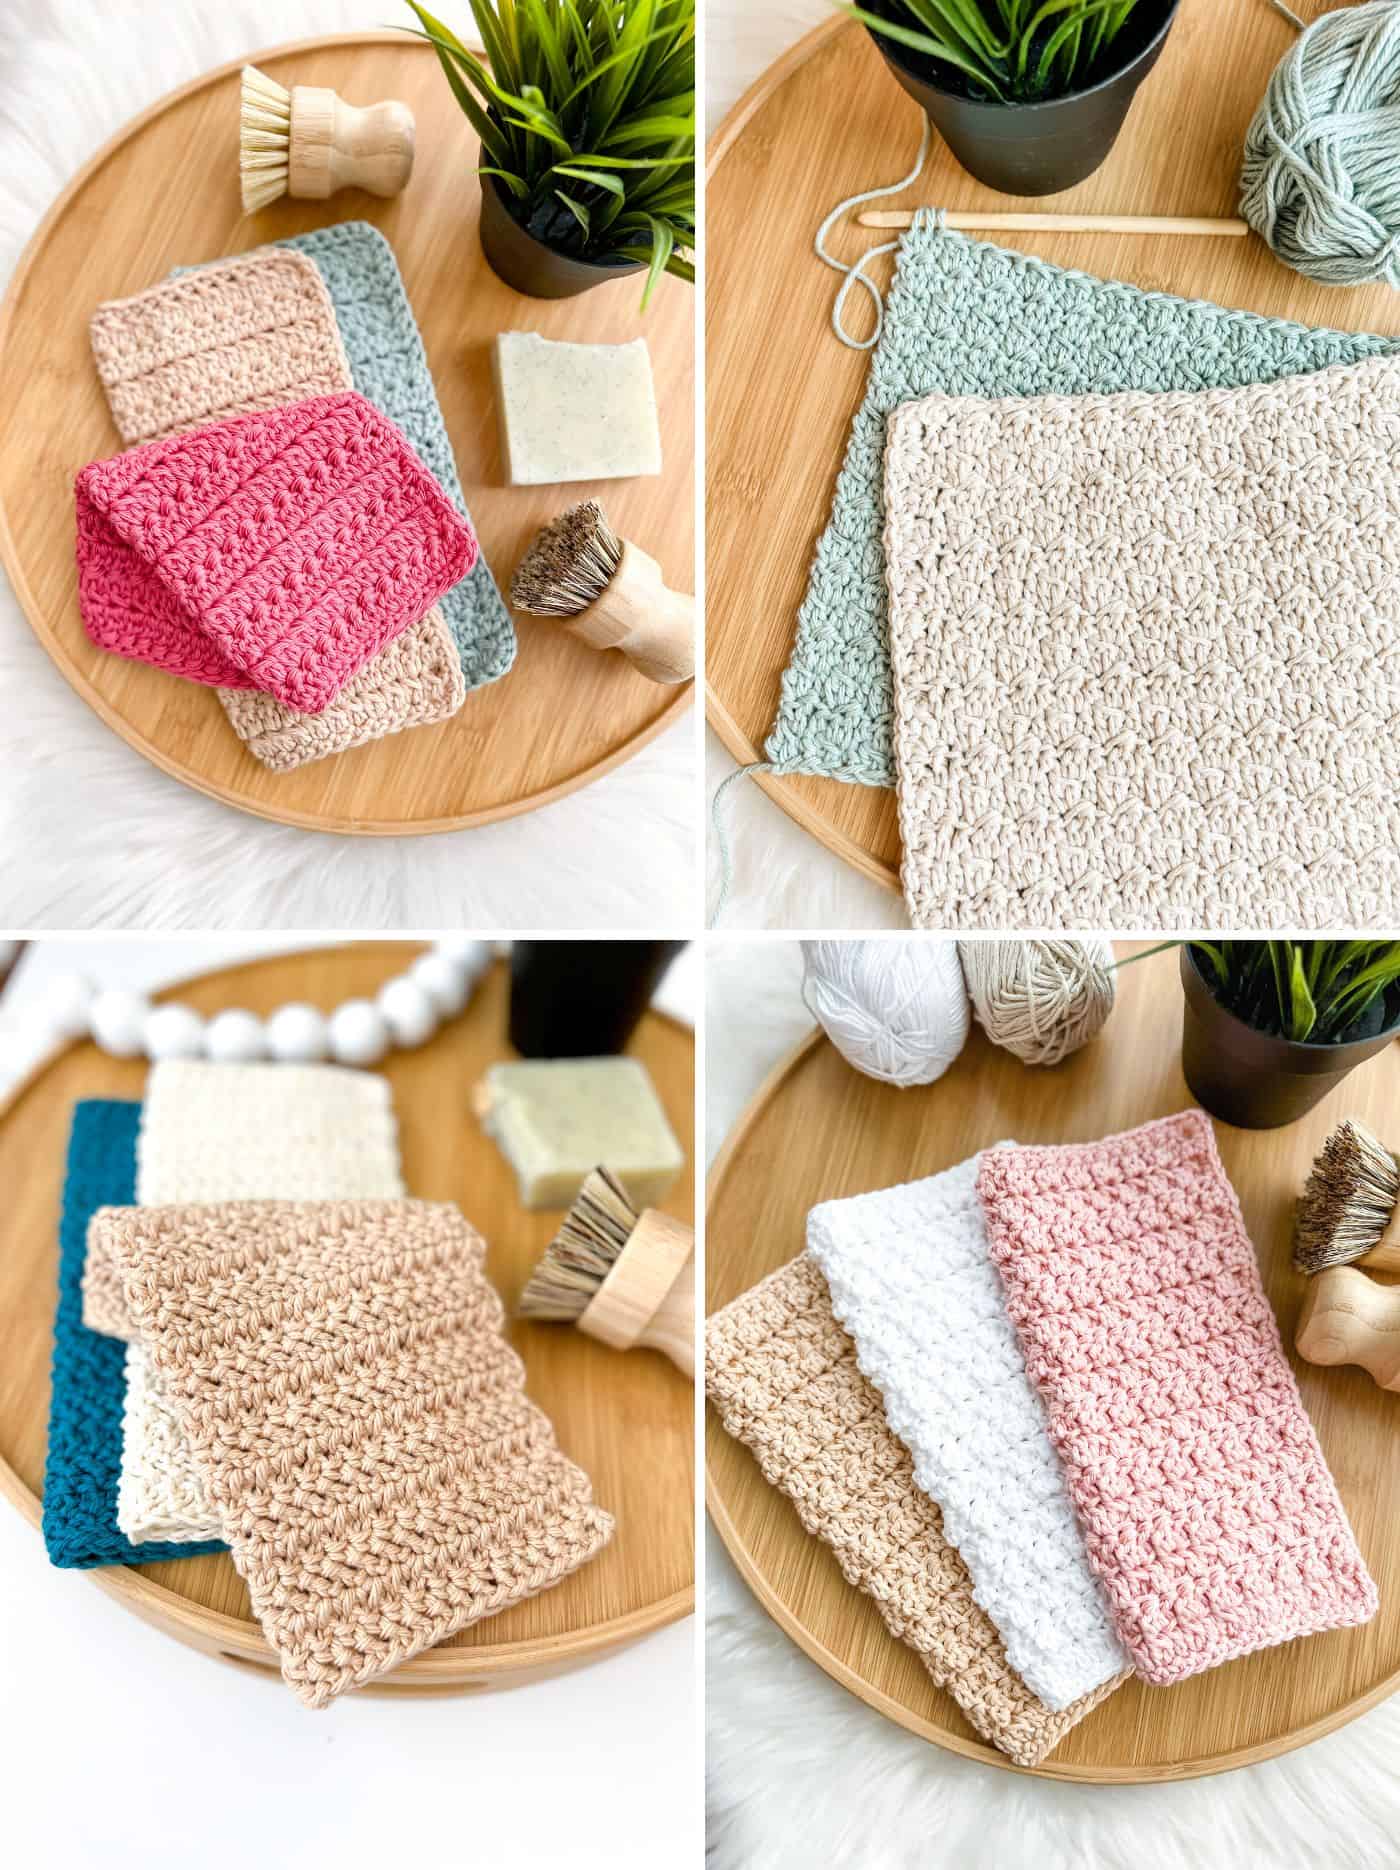 Sweet Honey Crochet Dishcloths Free Patterns - Your Crochet